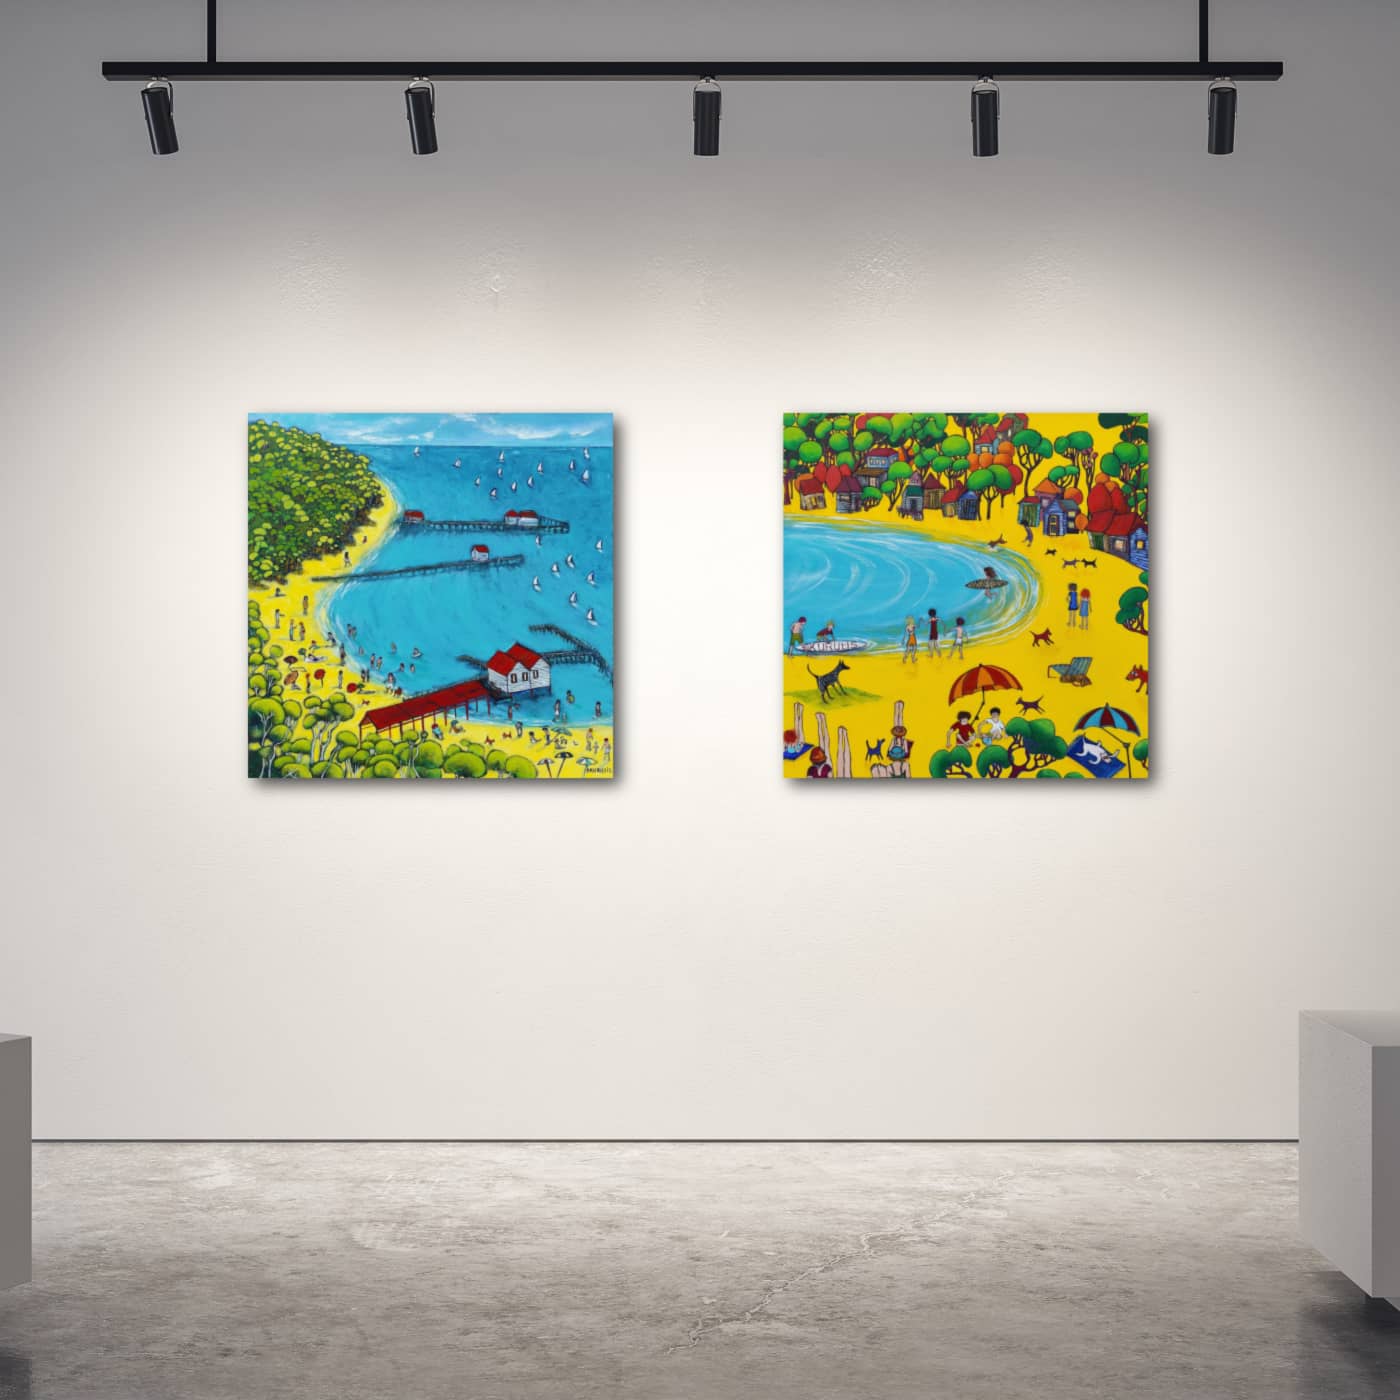 Tasmanian-Based Australian Artist Beverley Skurulis Painting ~ 'Sea You at Sorrento' (Left) - Curate Art & Design Gallery Sorrento Victoria